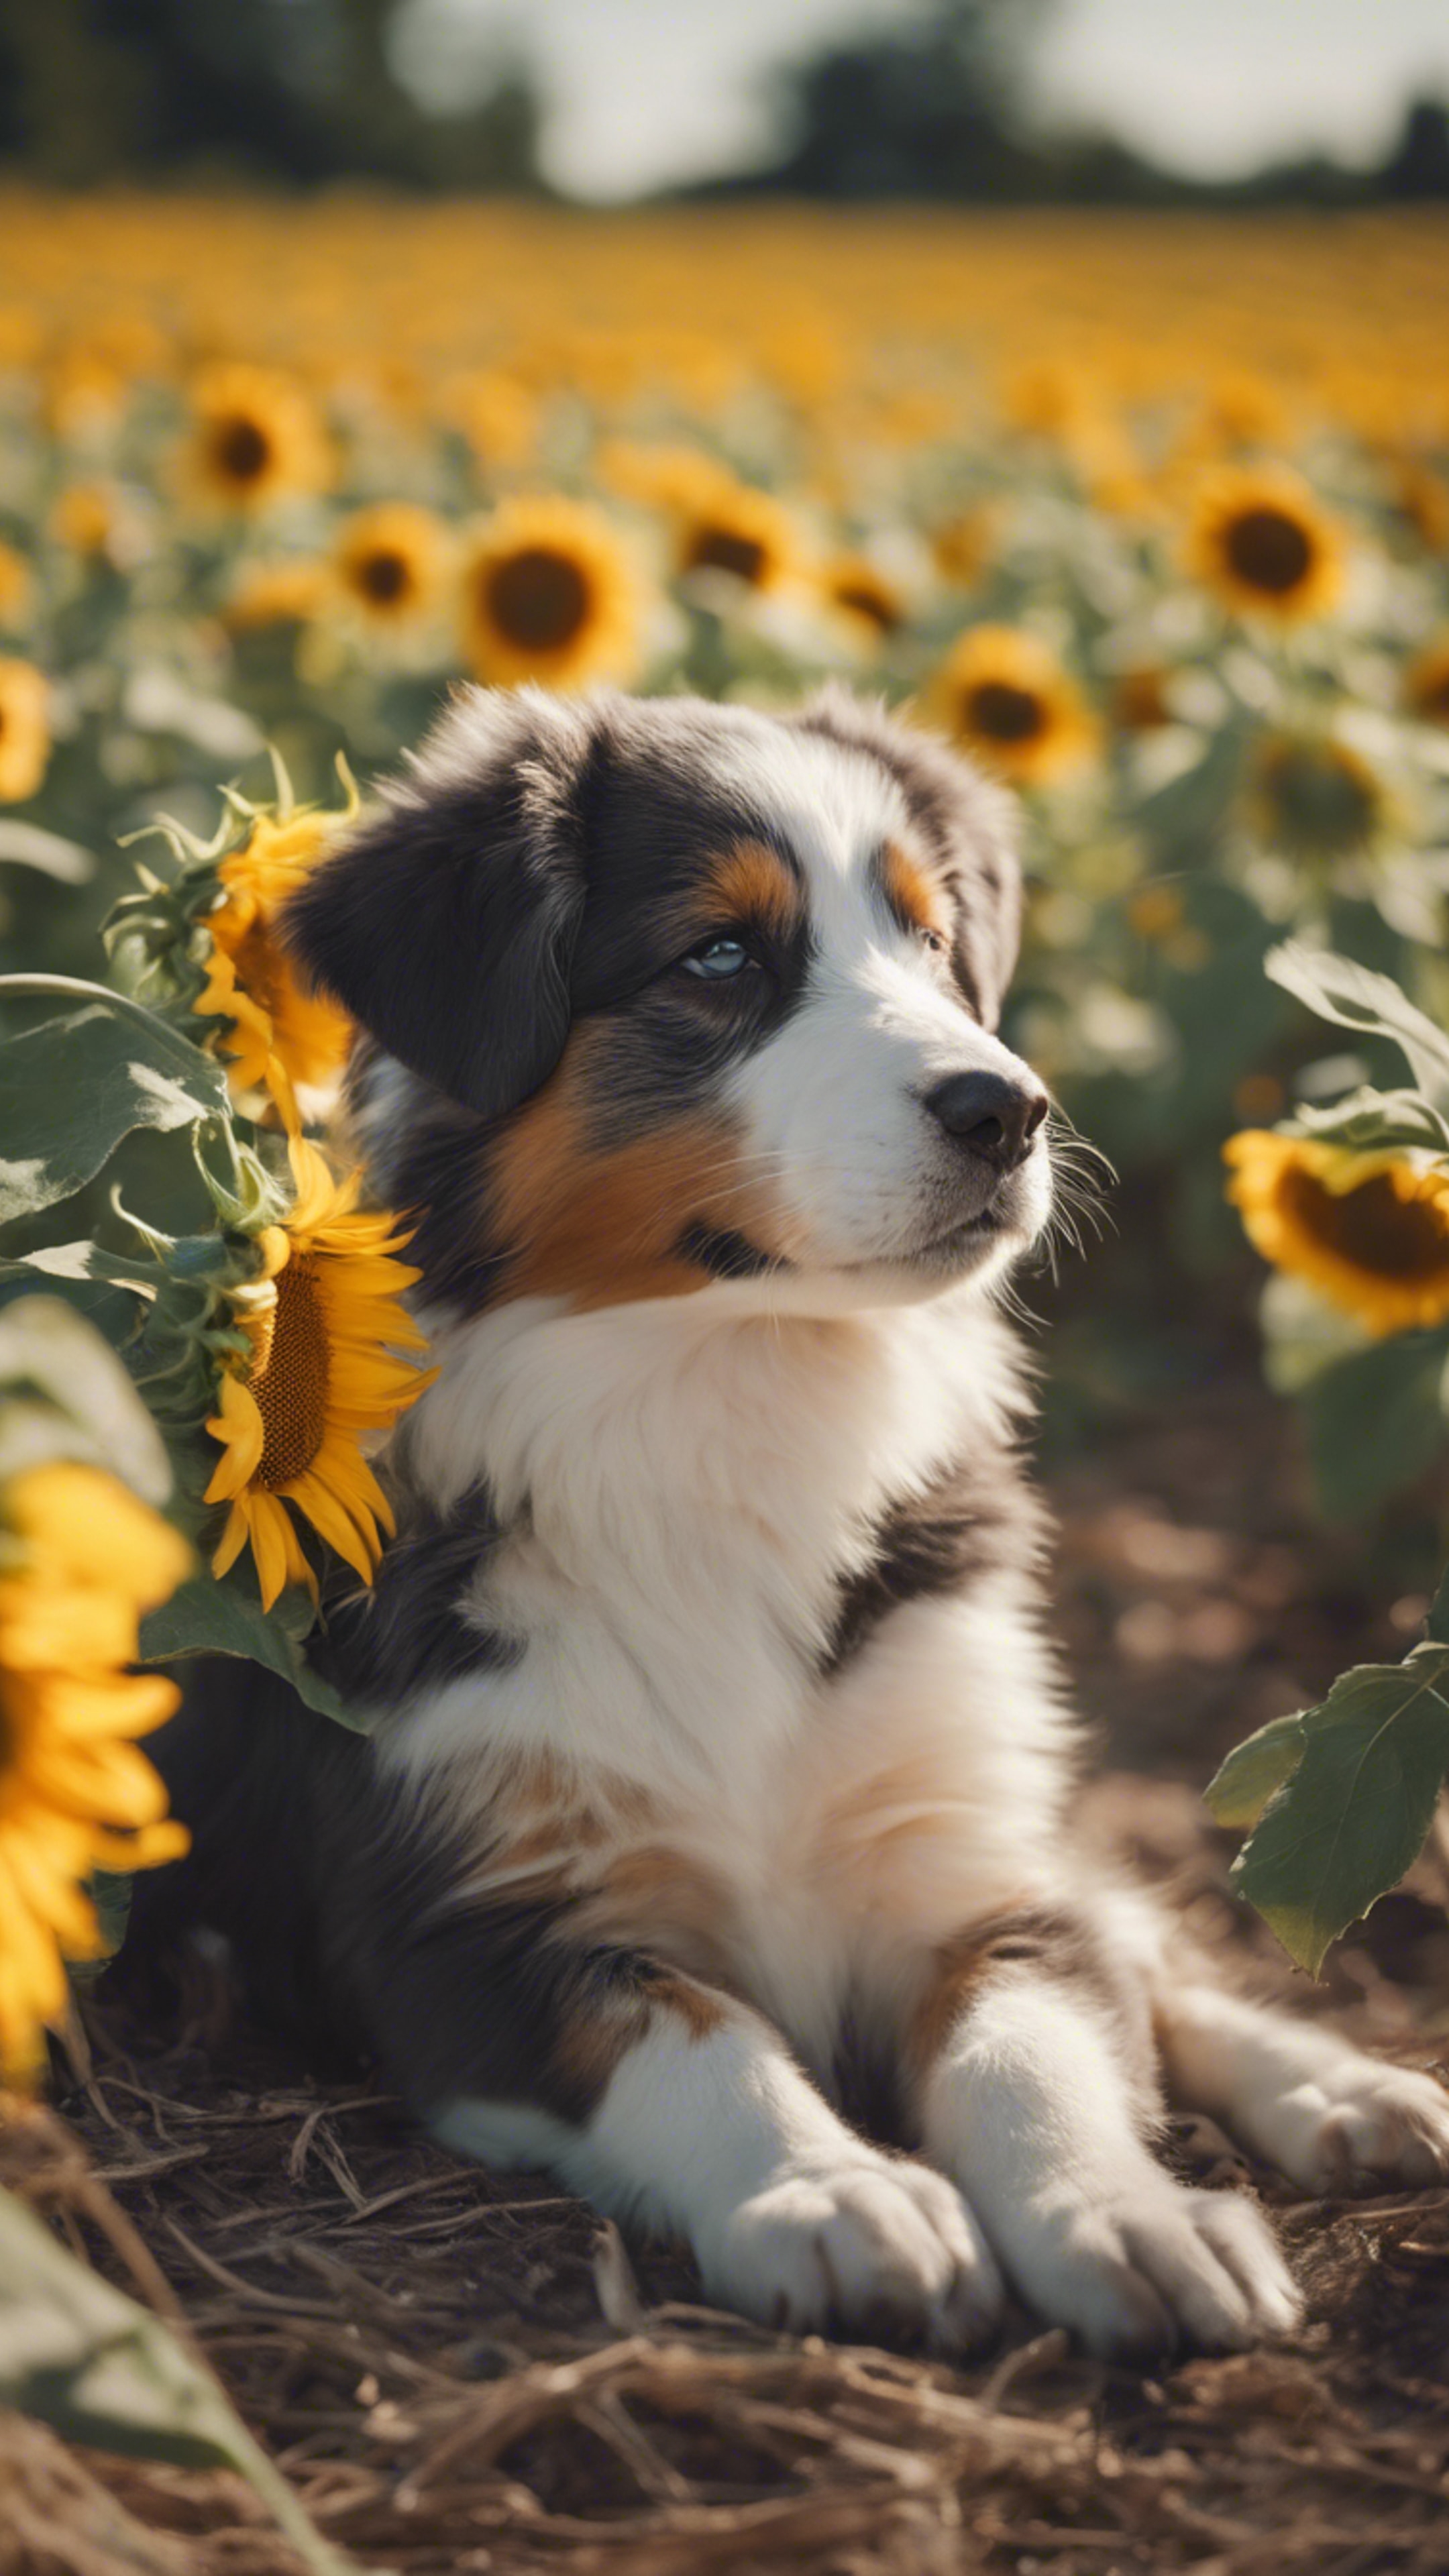 An Australian Shepard puppy dozing off in the field of blooming sunflowers under the summer sun. ورق الجدران[3112e983c8704a9792f4]